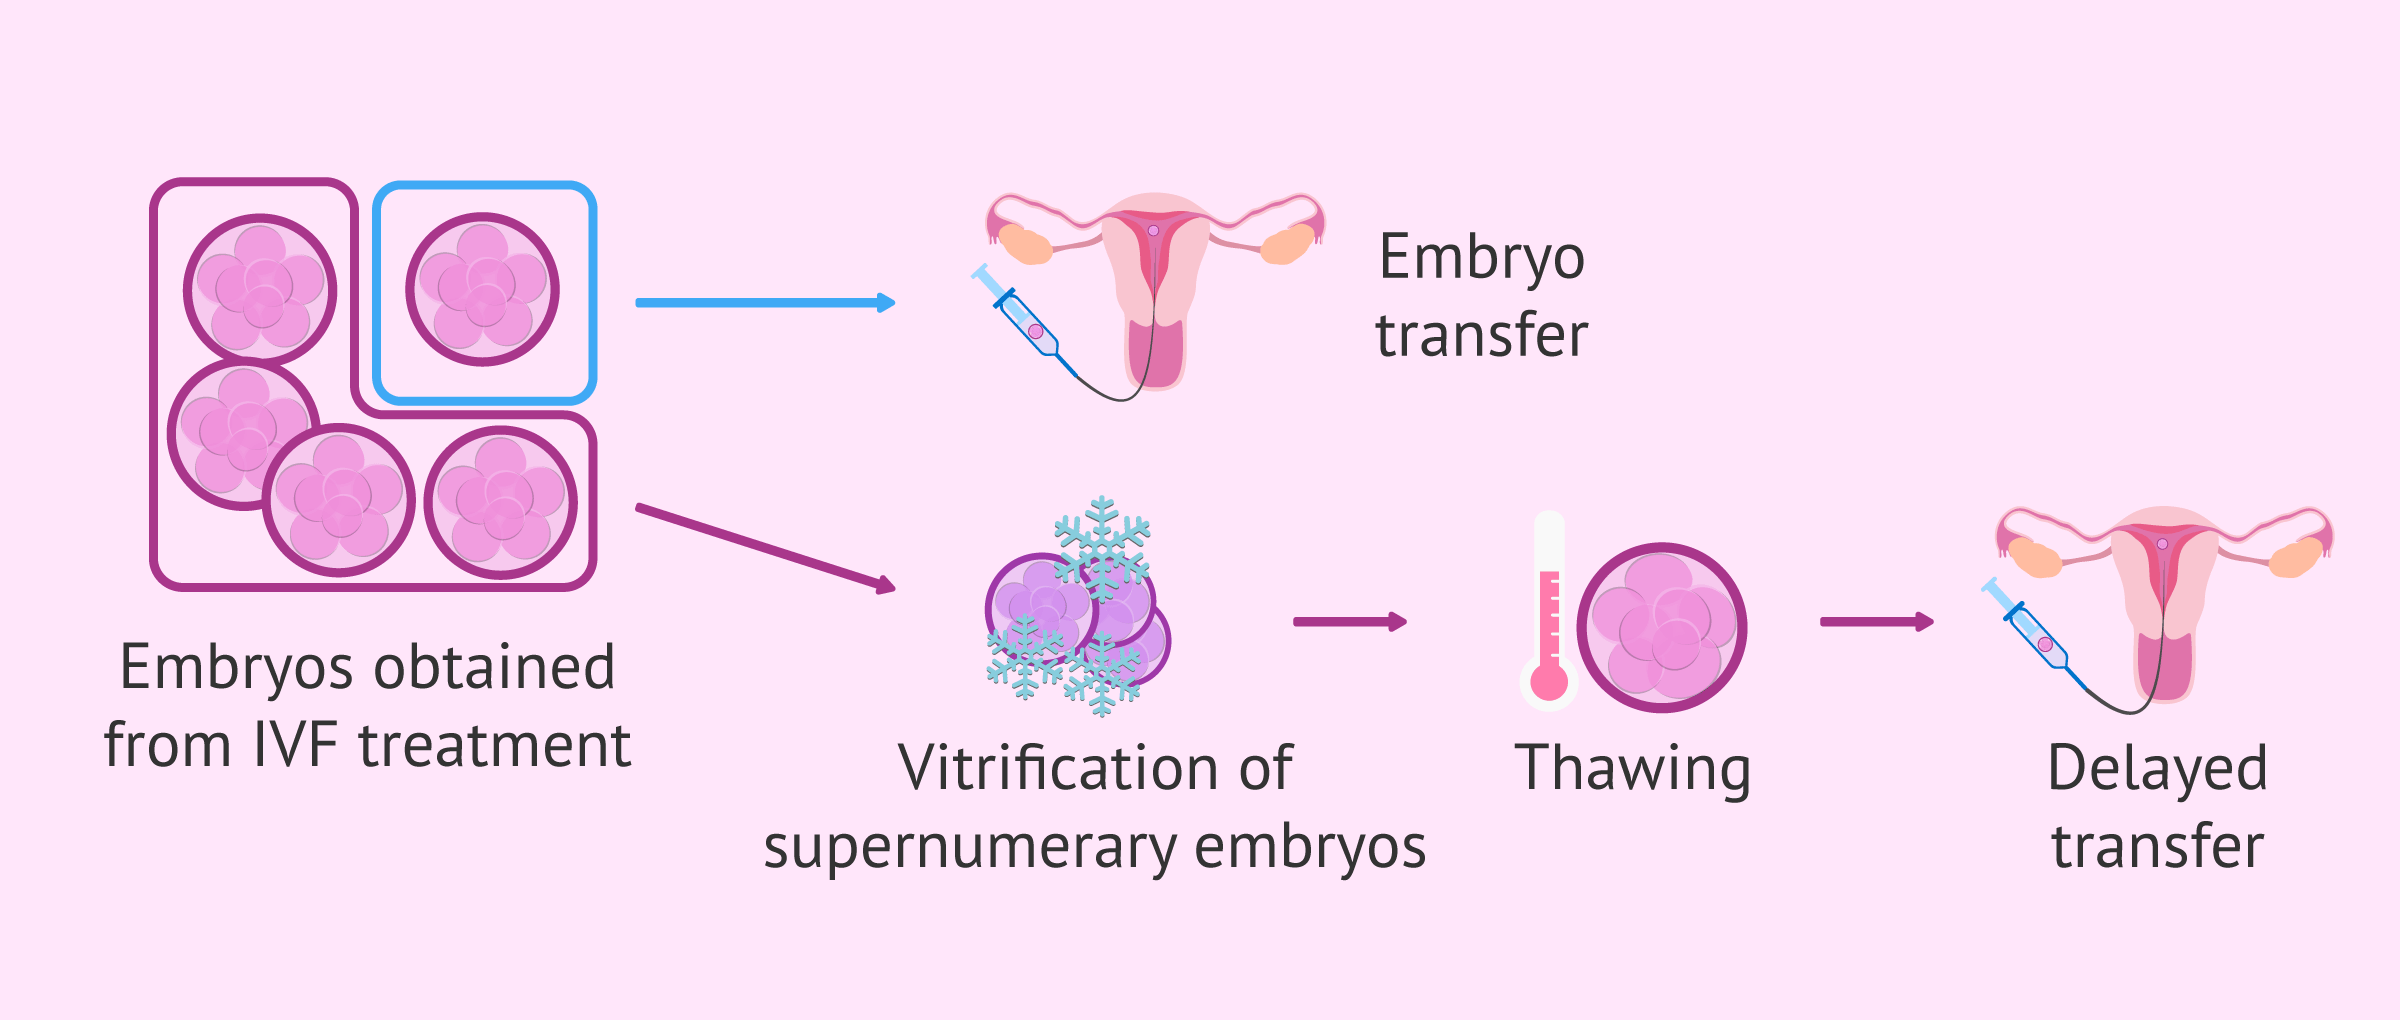 Future use of vitrified supernumerary embryos